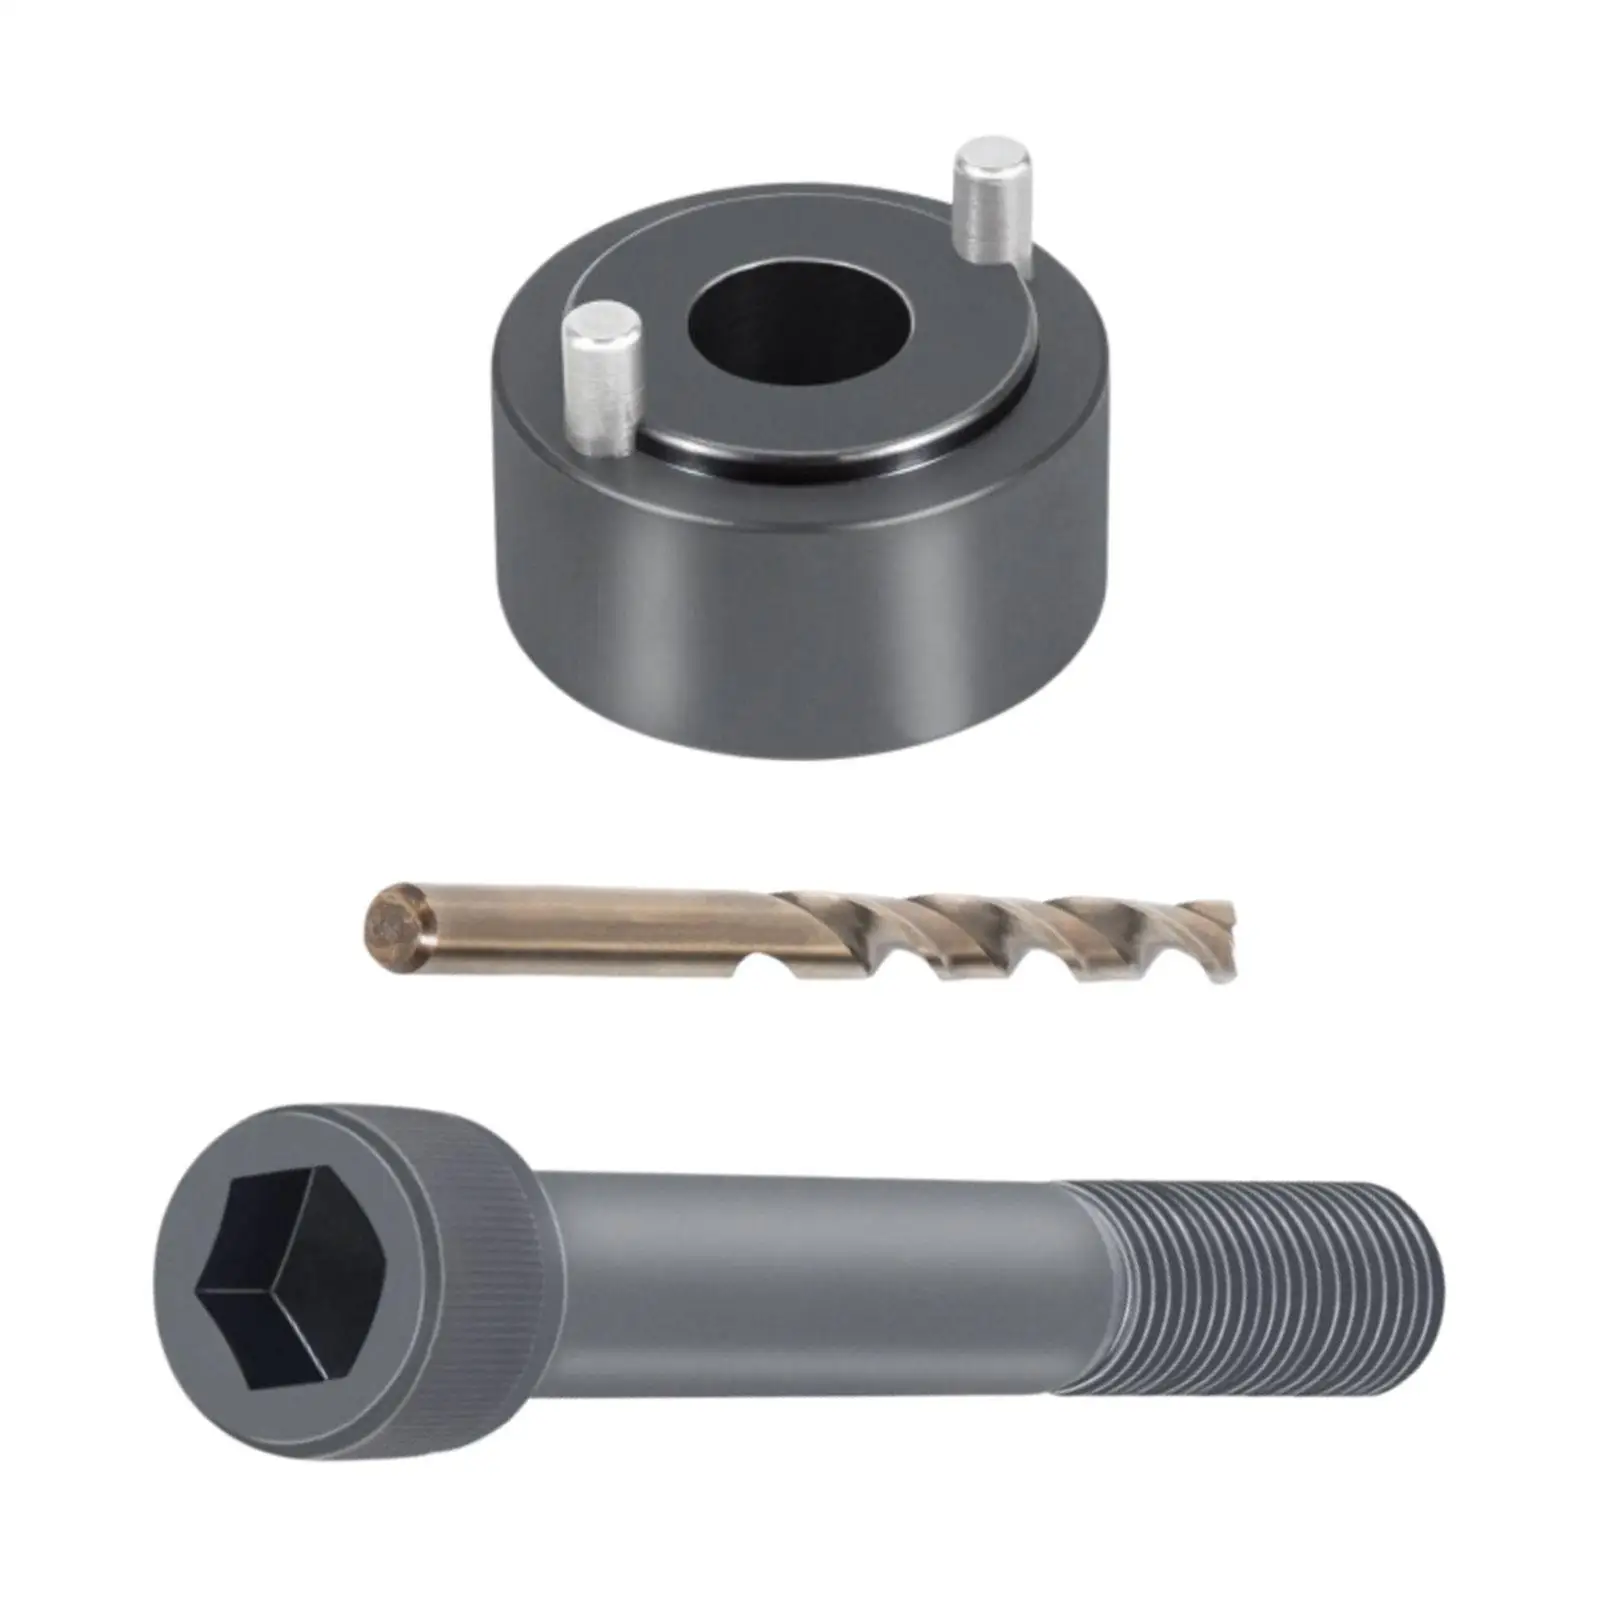 Crank Pin Kit Practical Assembly Replaces Crankshaft Damper Drill Pinning